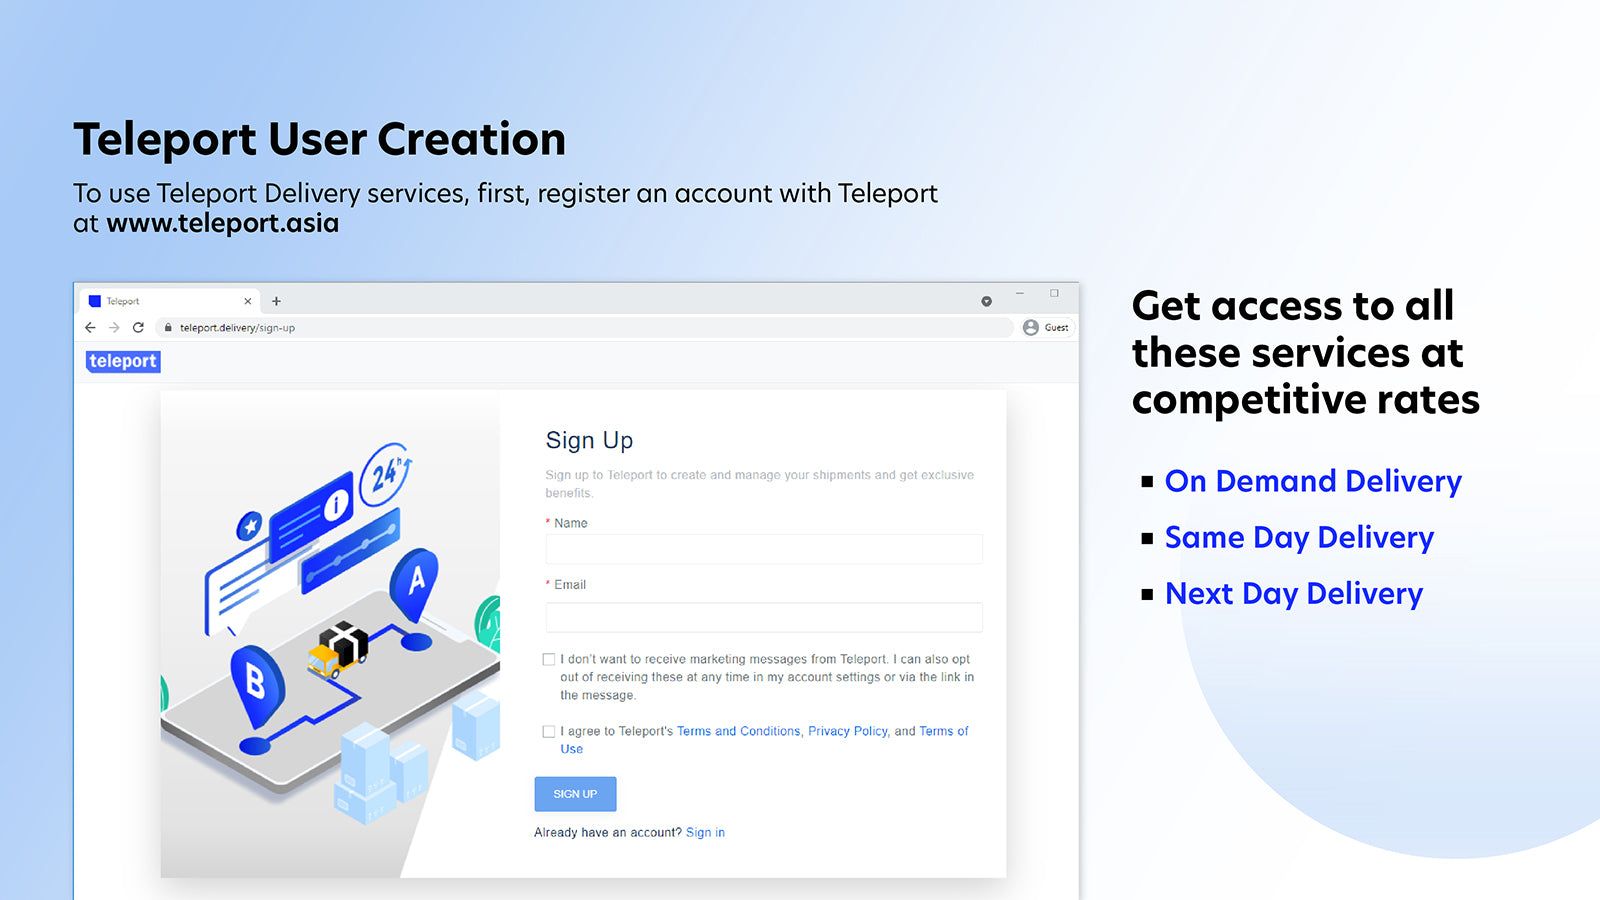 Teleport User Creation